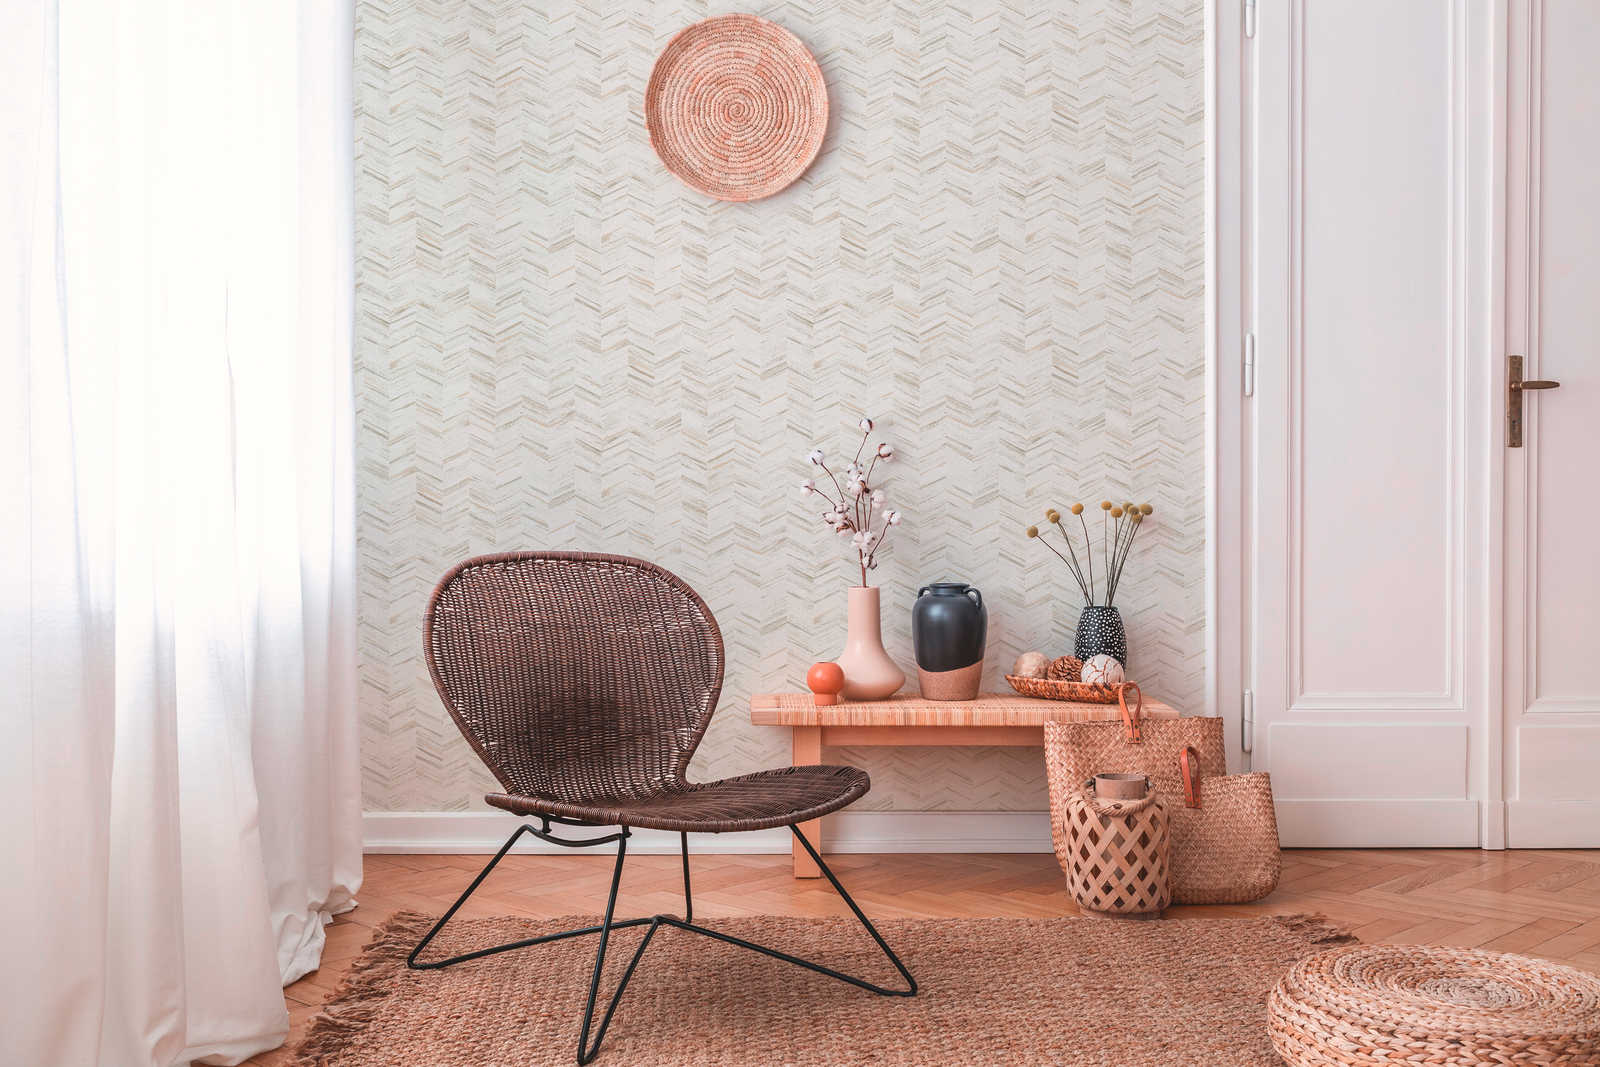             wallpaper wood look stripes with herringbone effect - white, cream
        